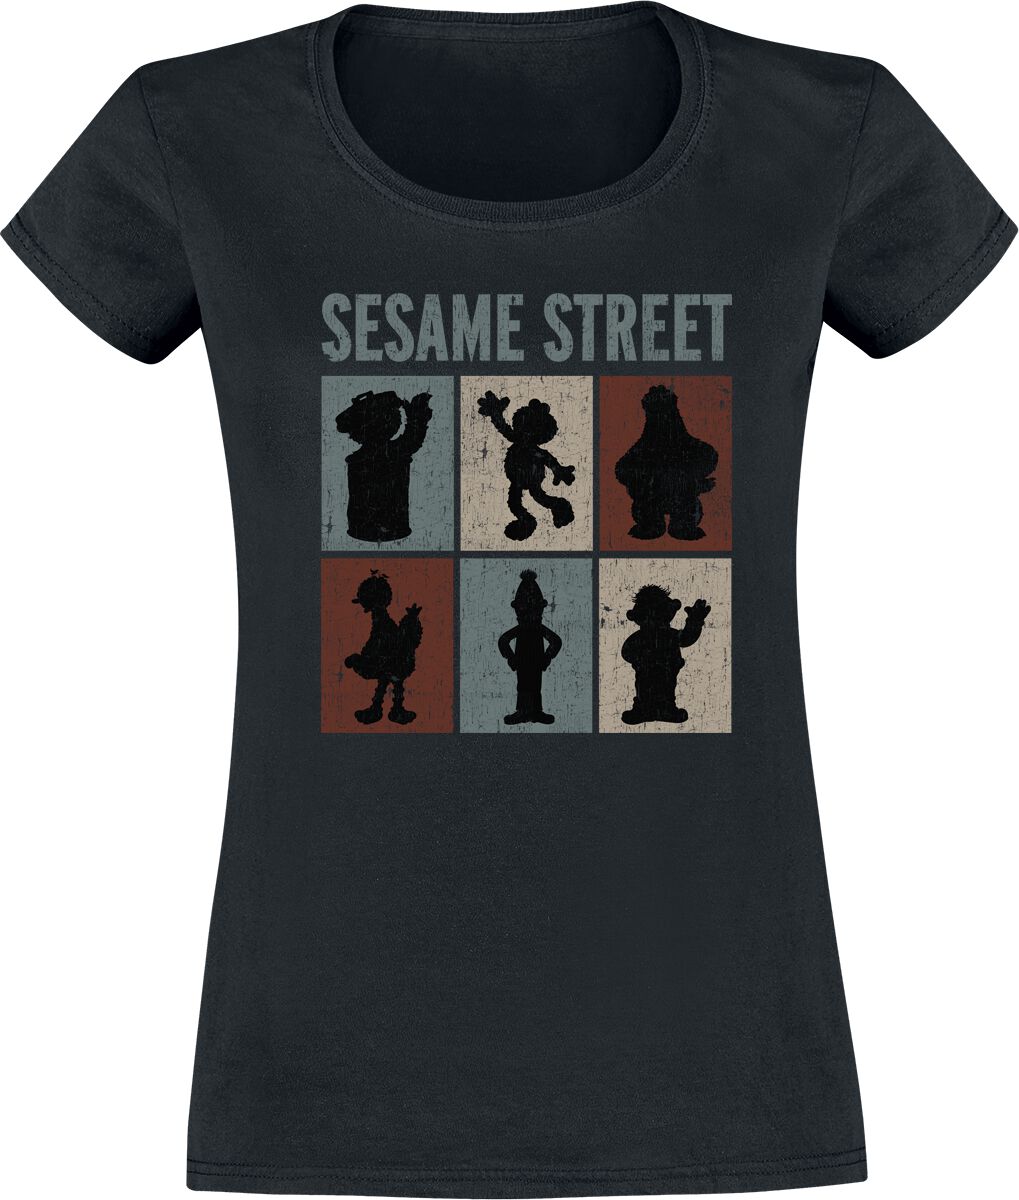 Sesame Street Characters T-Shirt black